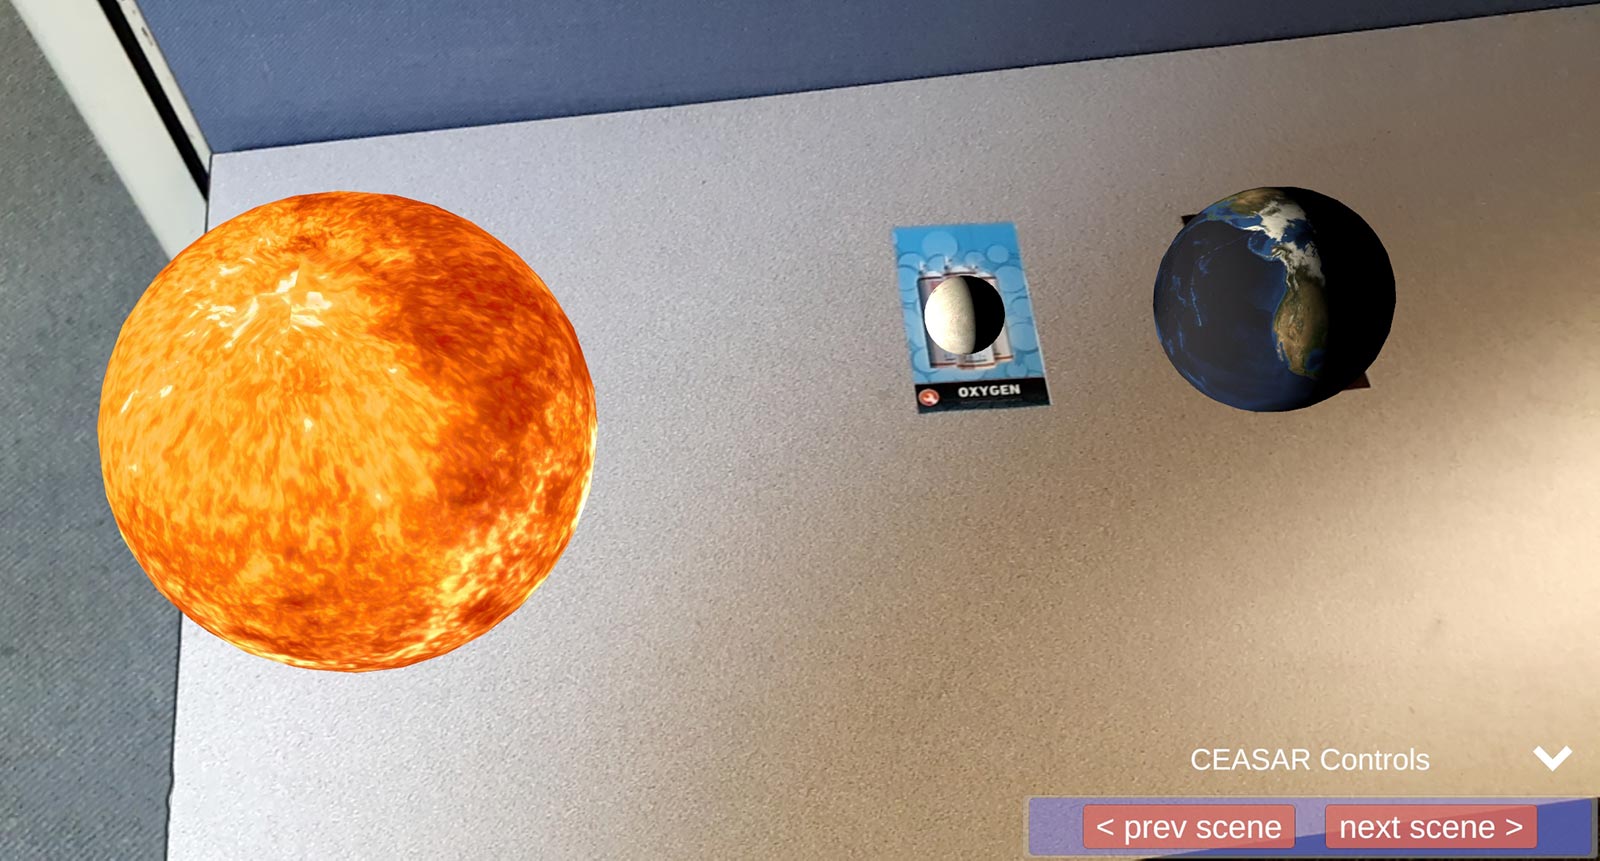 Sun, Earth, and moon mockup model